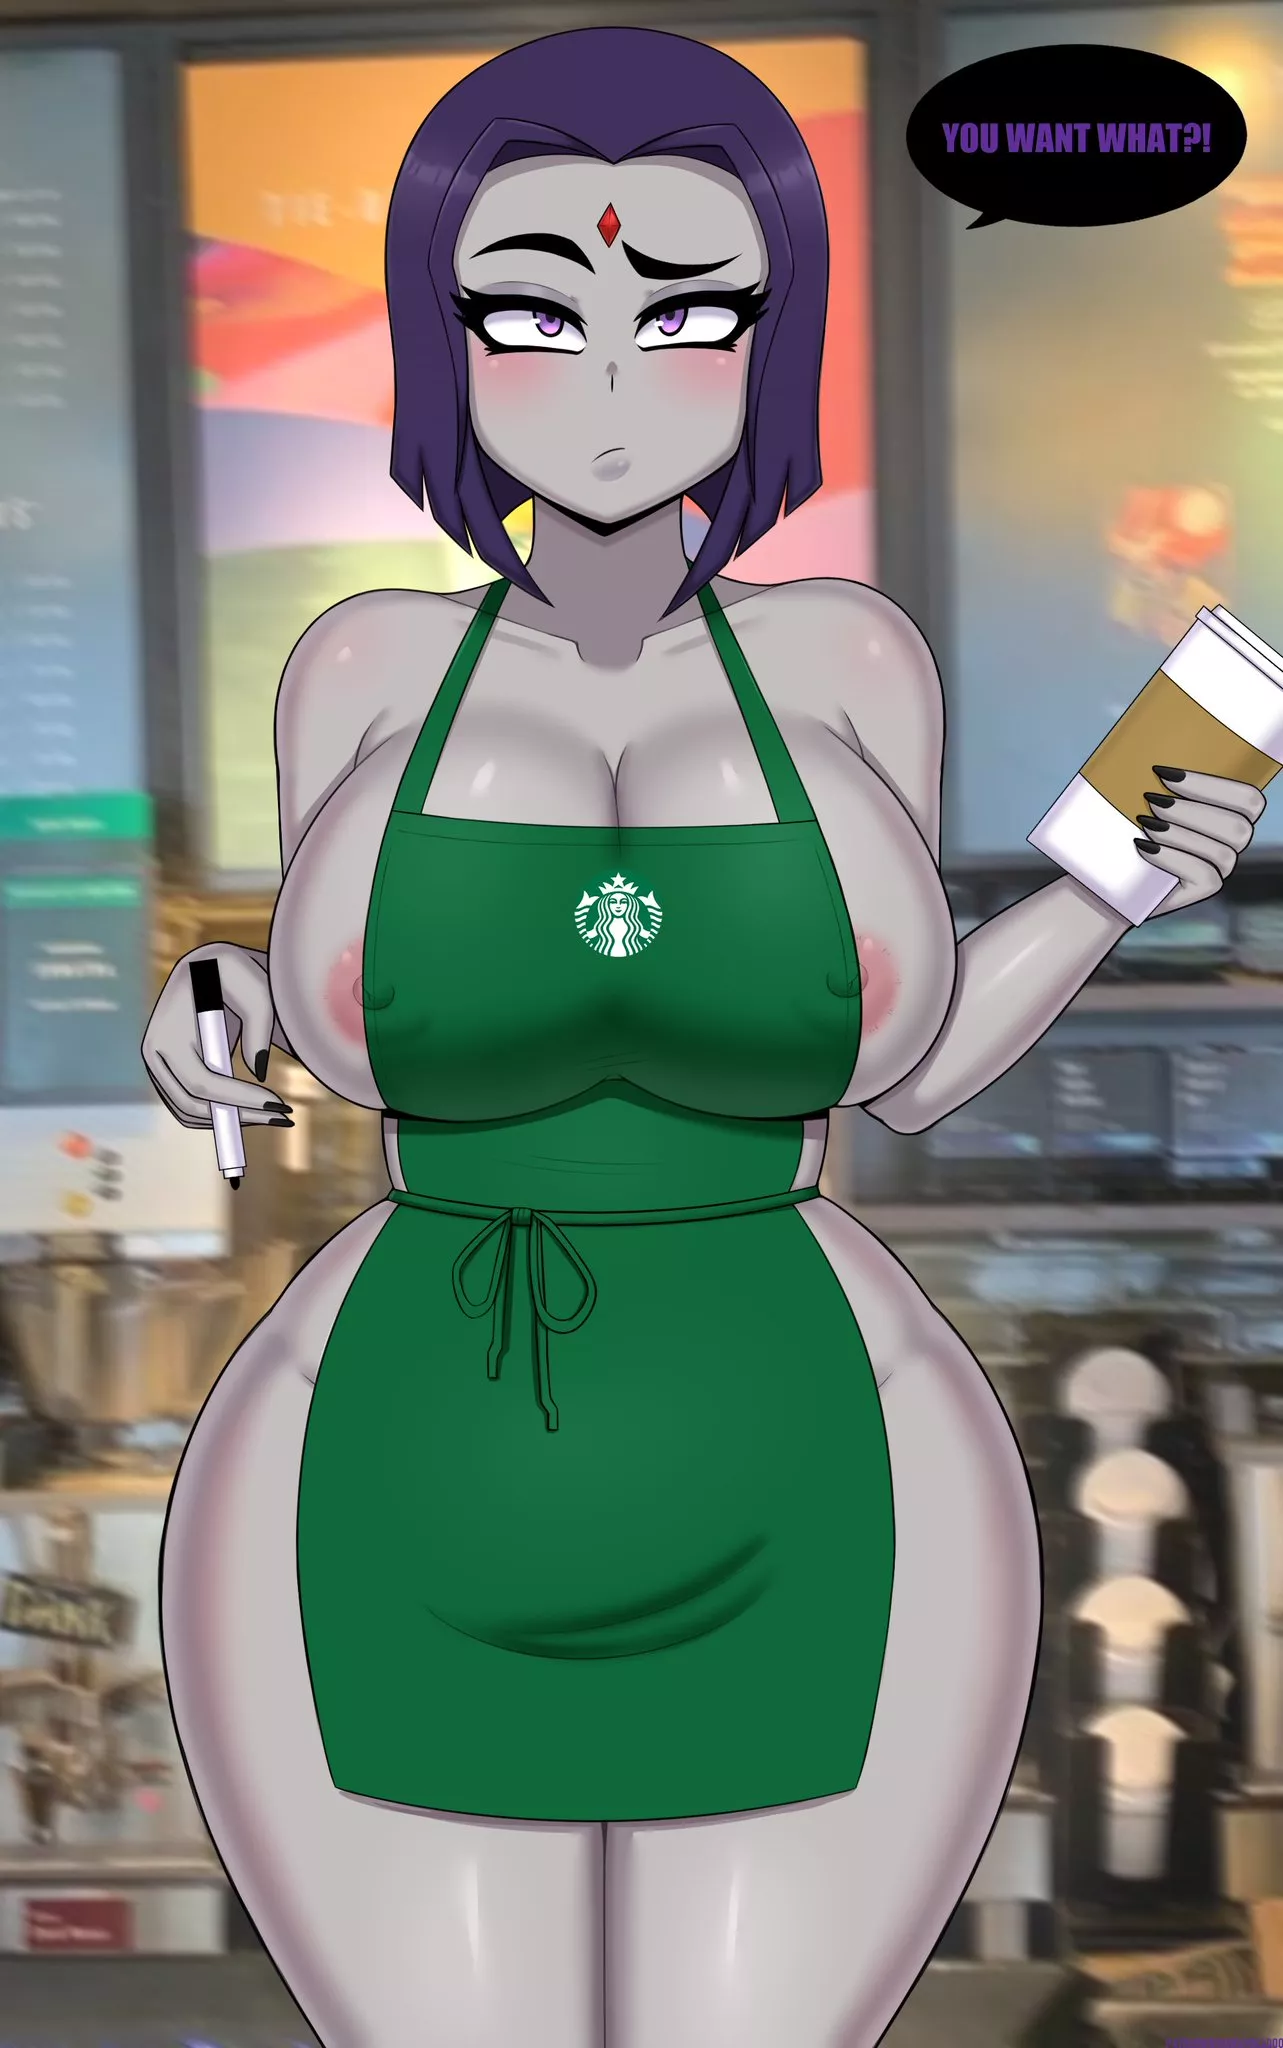 Onee breast milk latte please! (Drunkavocado) nudes : hentai | NUDE-PICS.ORG